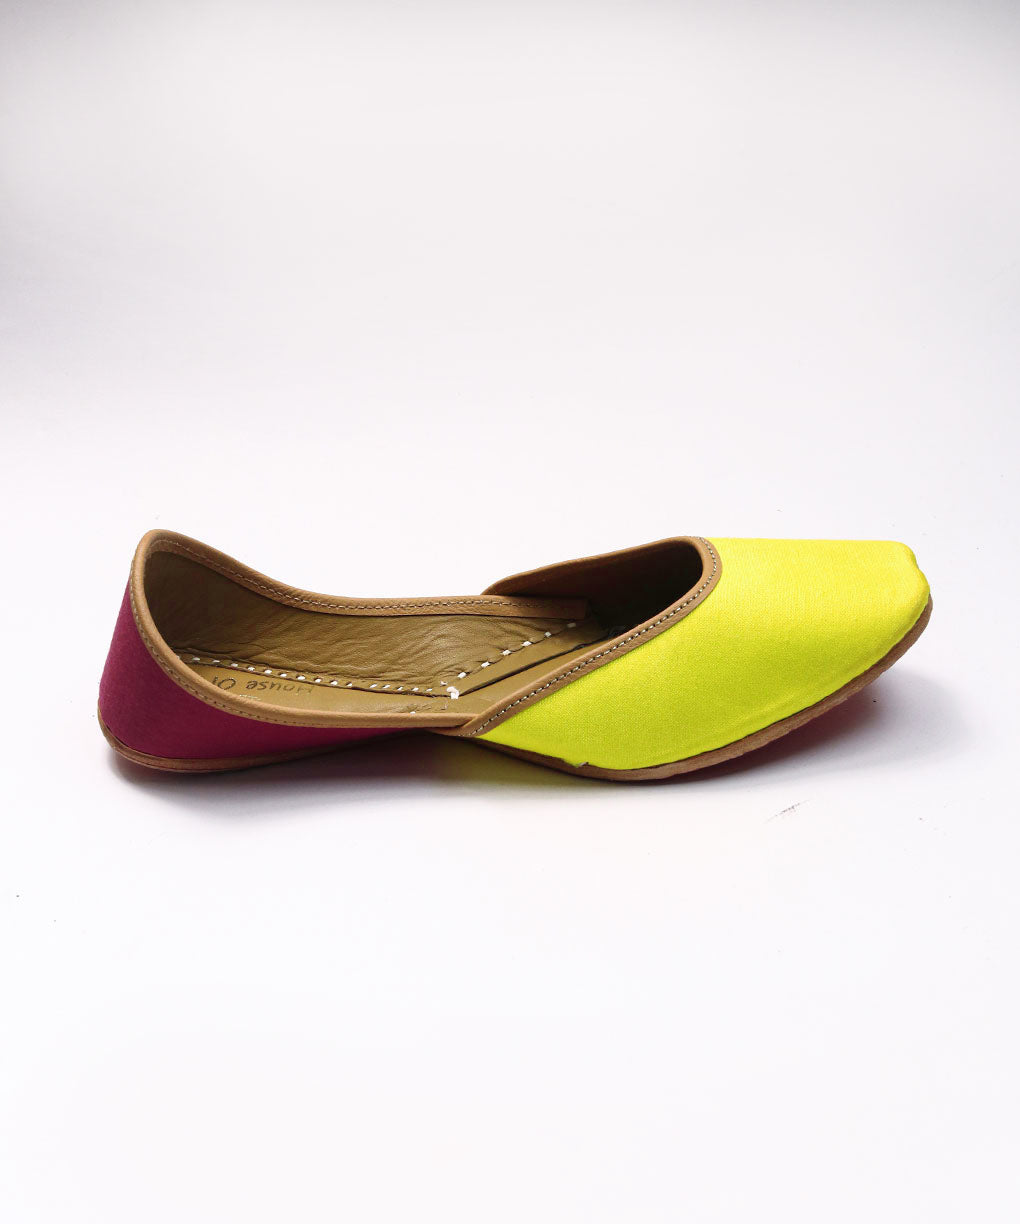 Colours Of Shigmo Jutti Genuine Leather Footwear